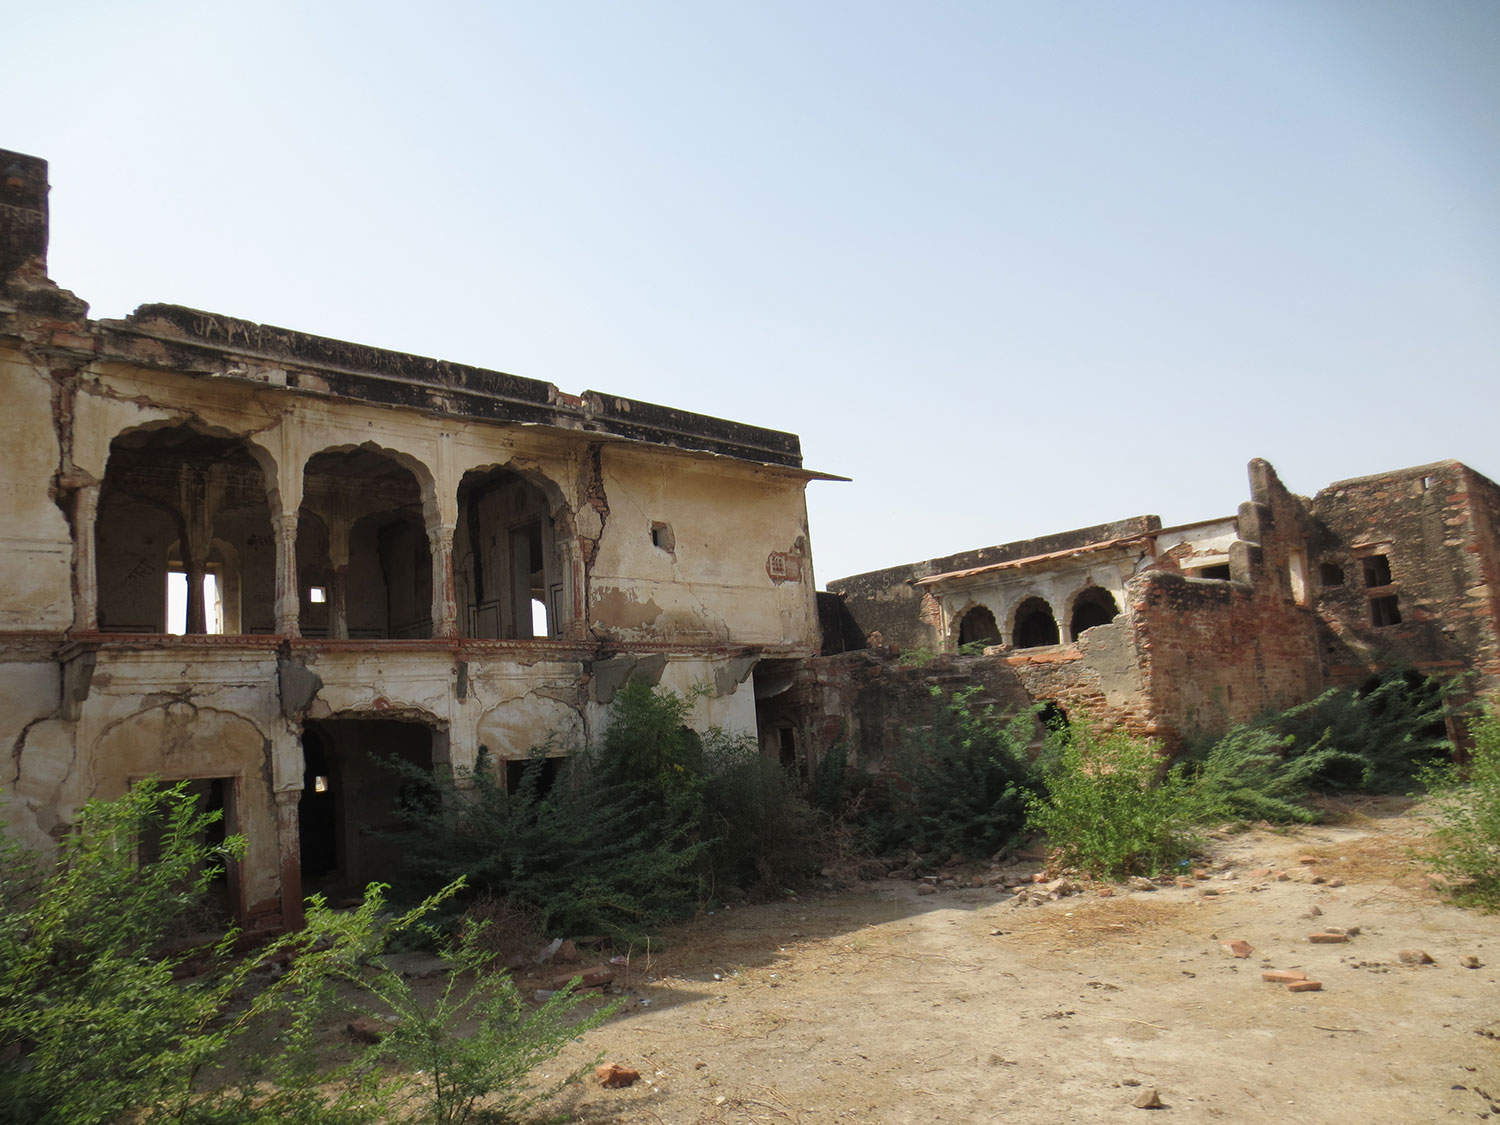 Meerabai's birth home Merta, Rajasthan INDIA